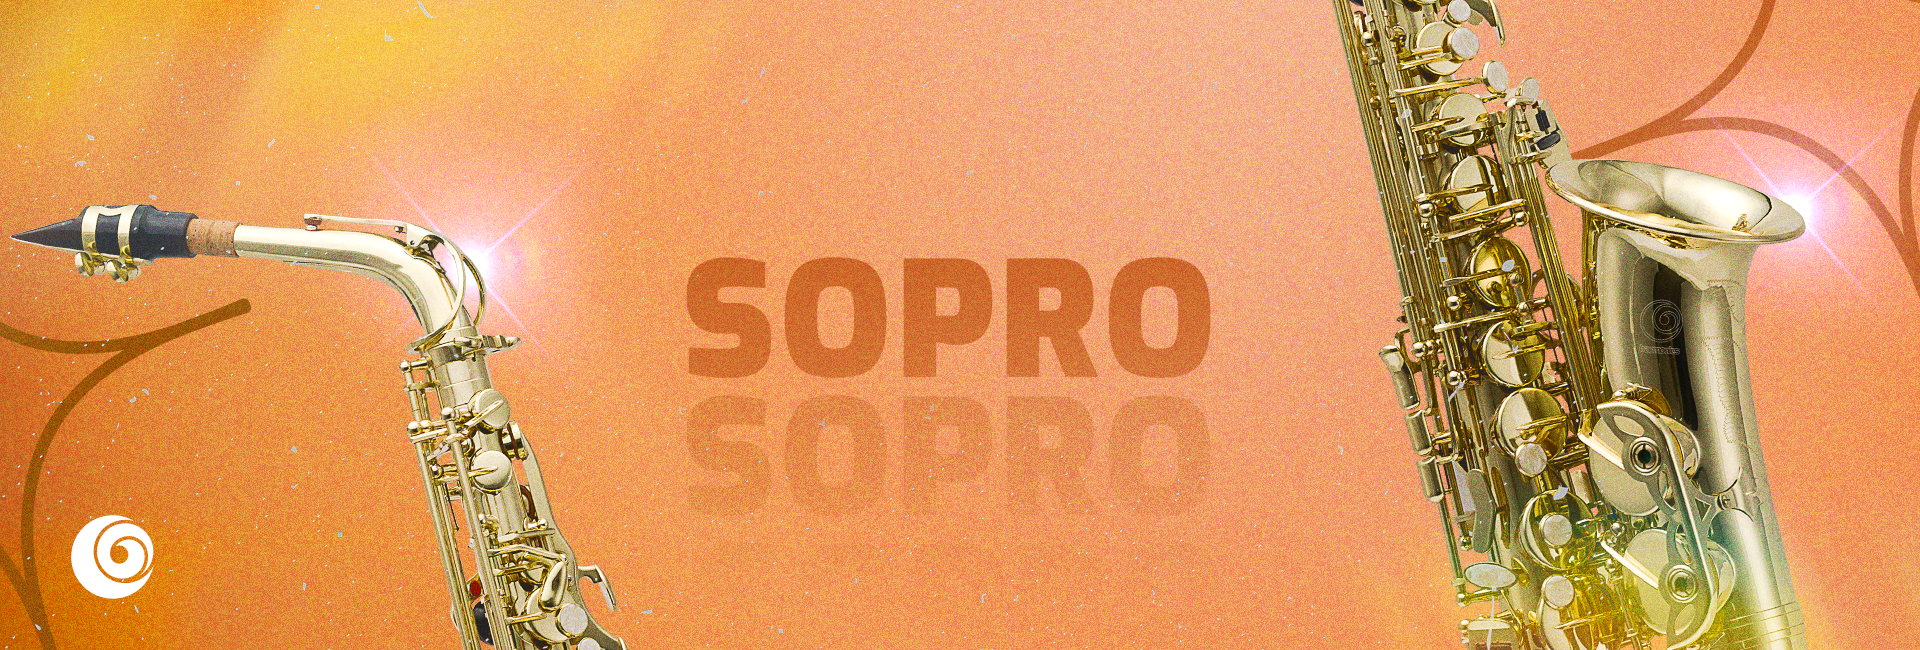 Sopro_-_1920x650